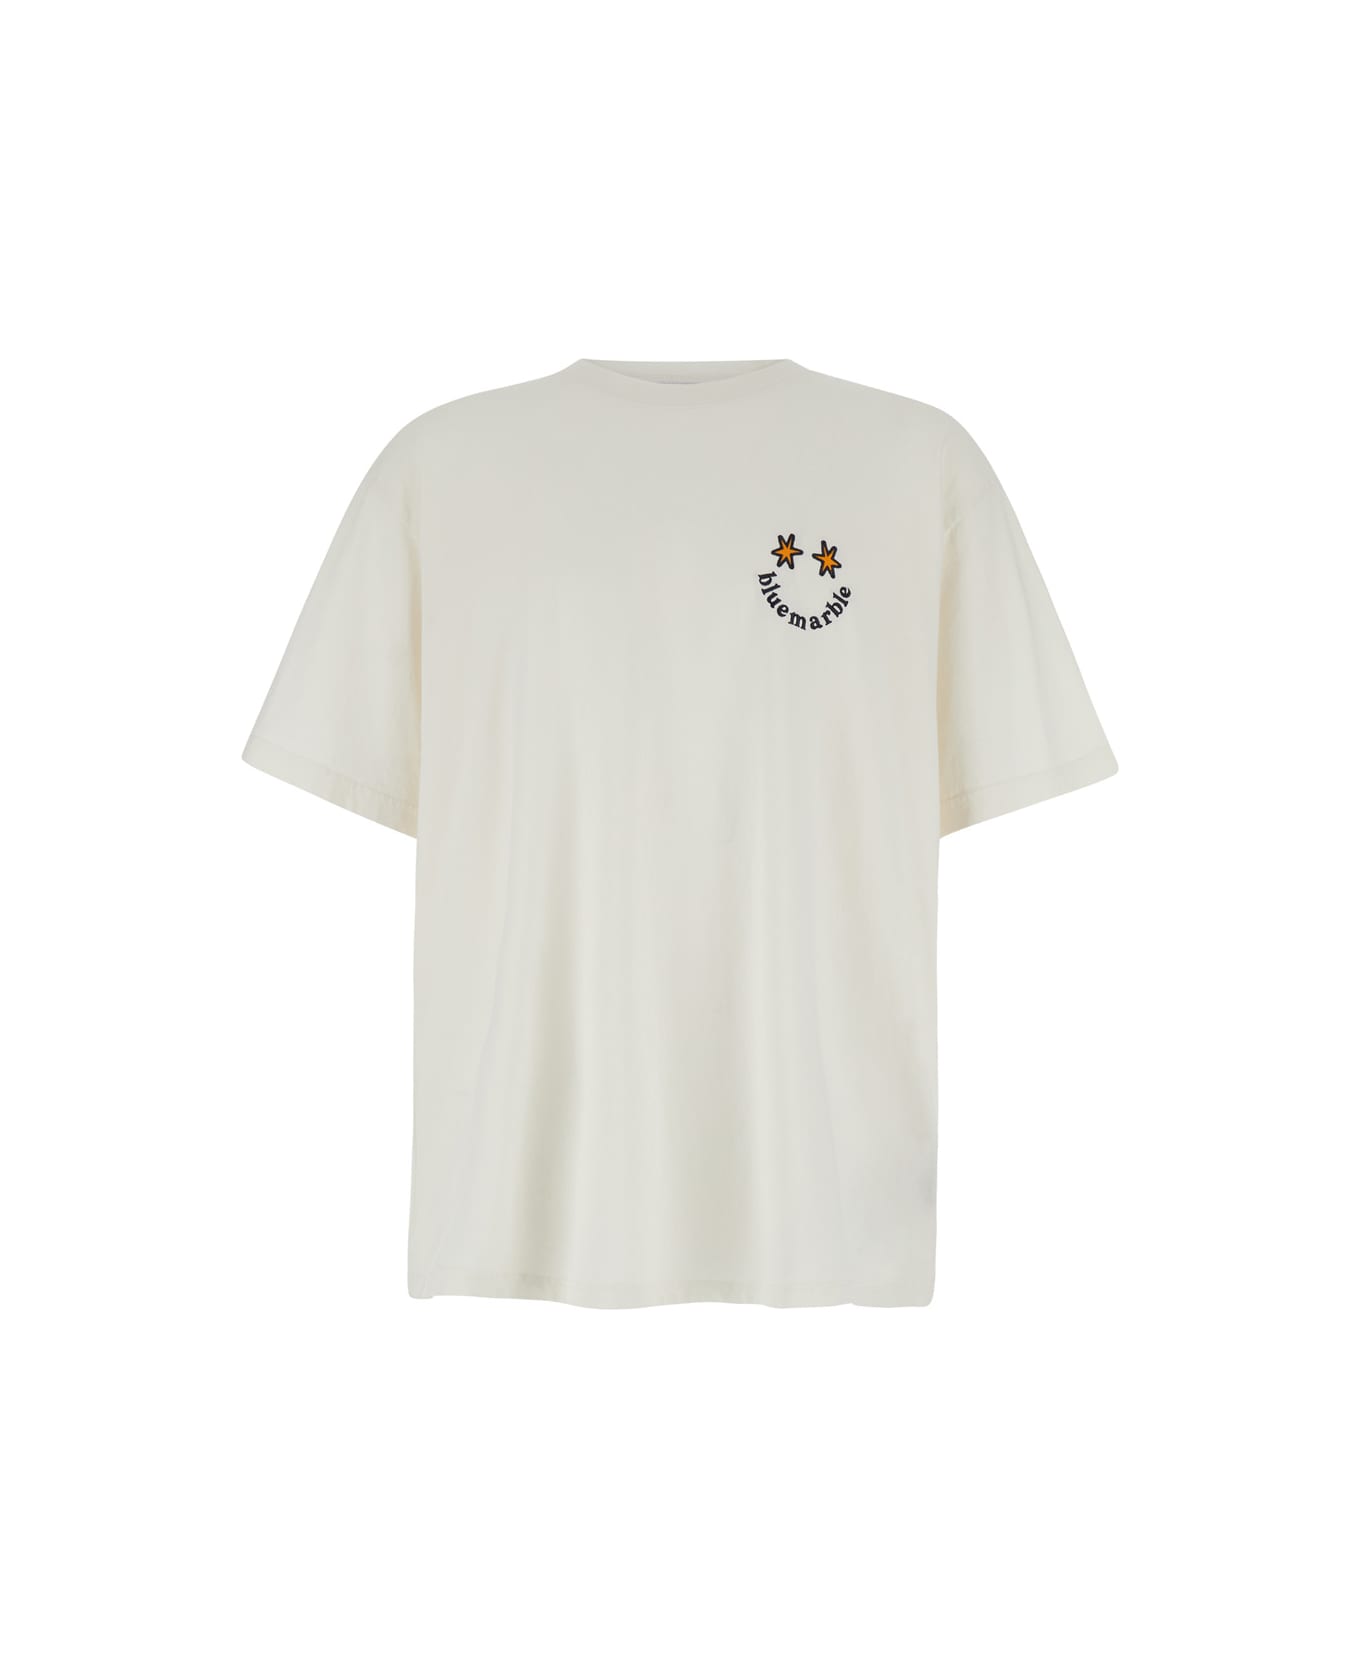 Bluemarble Smiley T-shirt - White